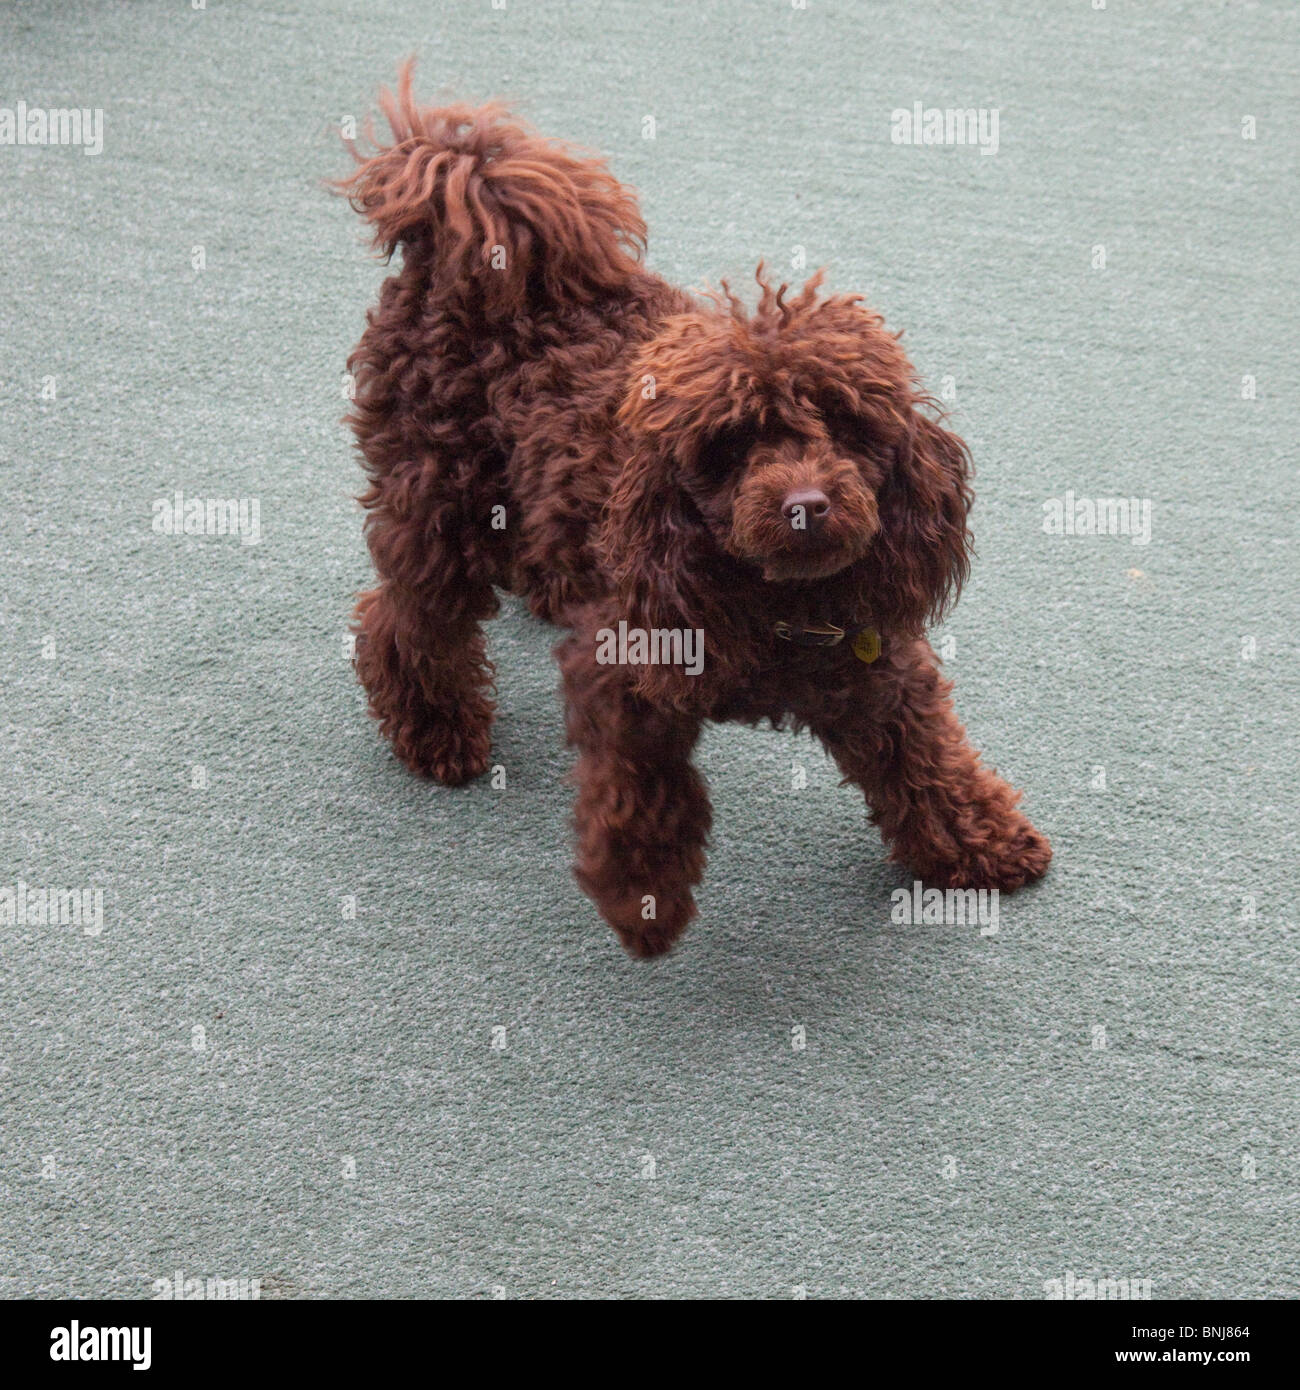 chocolate miniature poodle